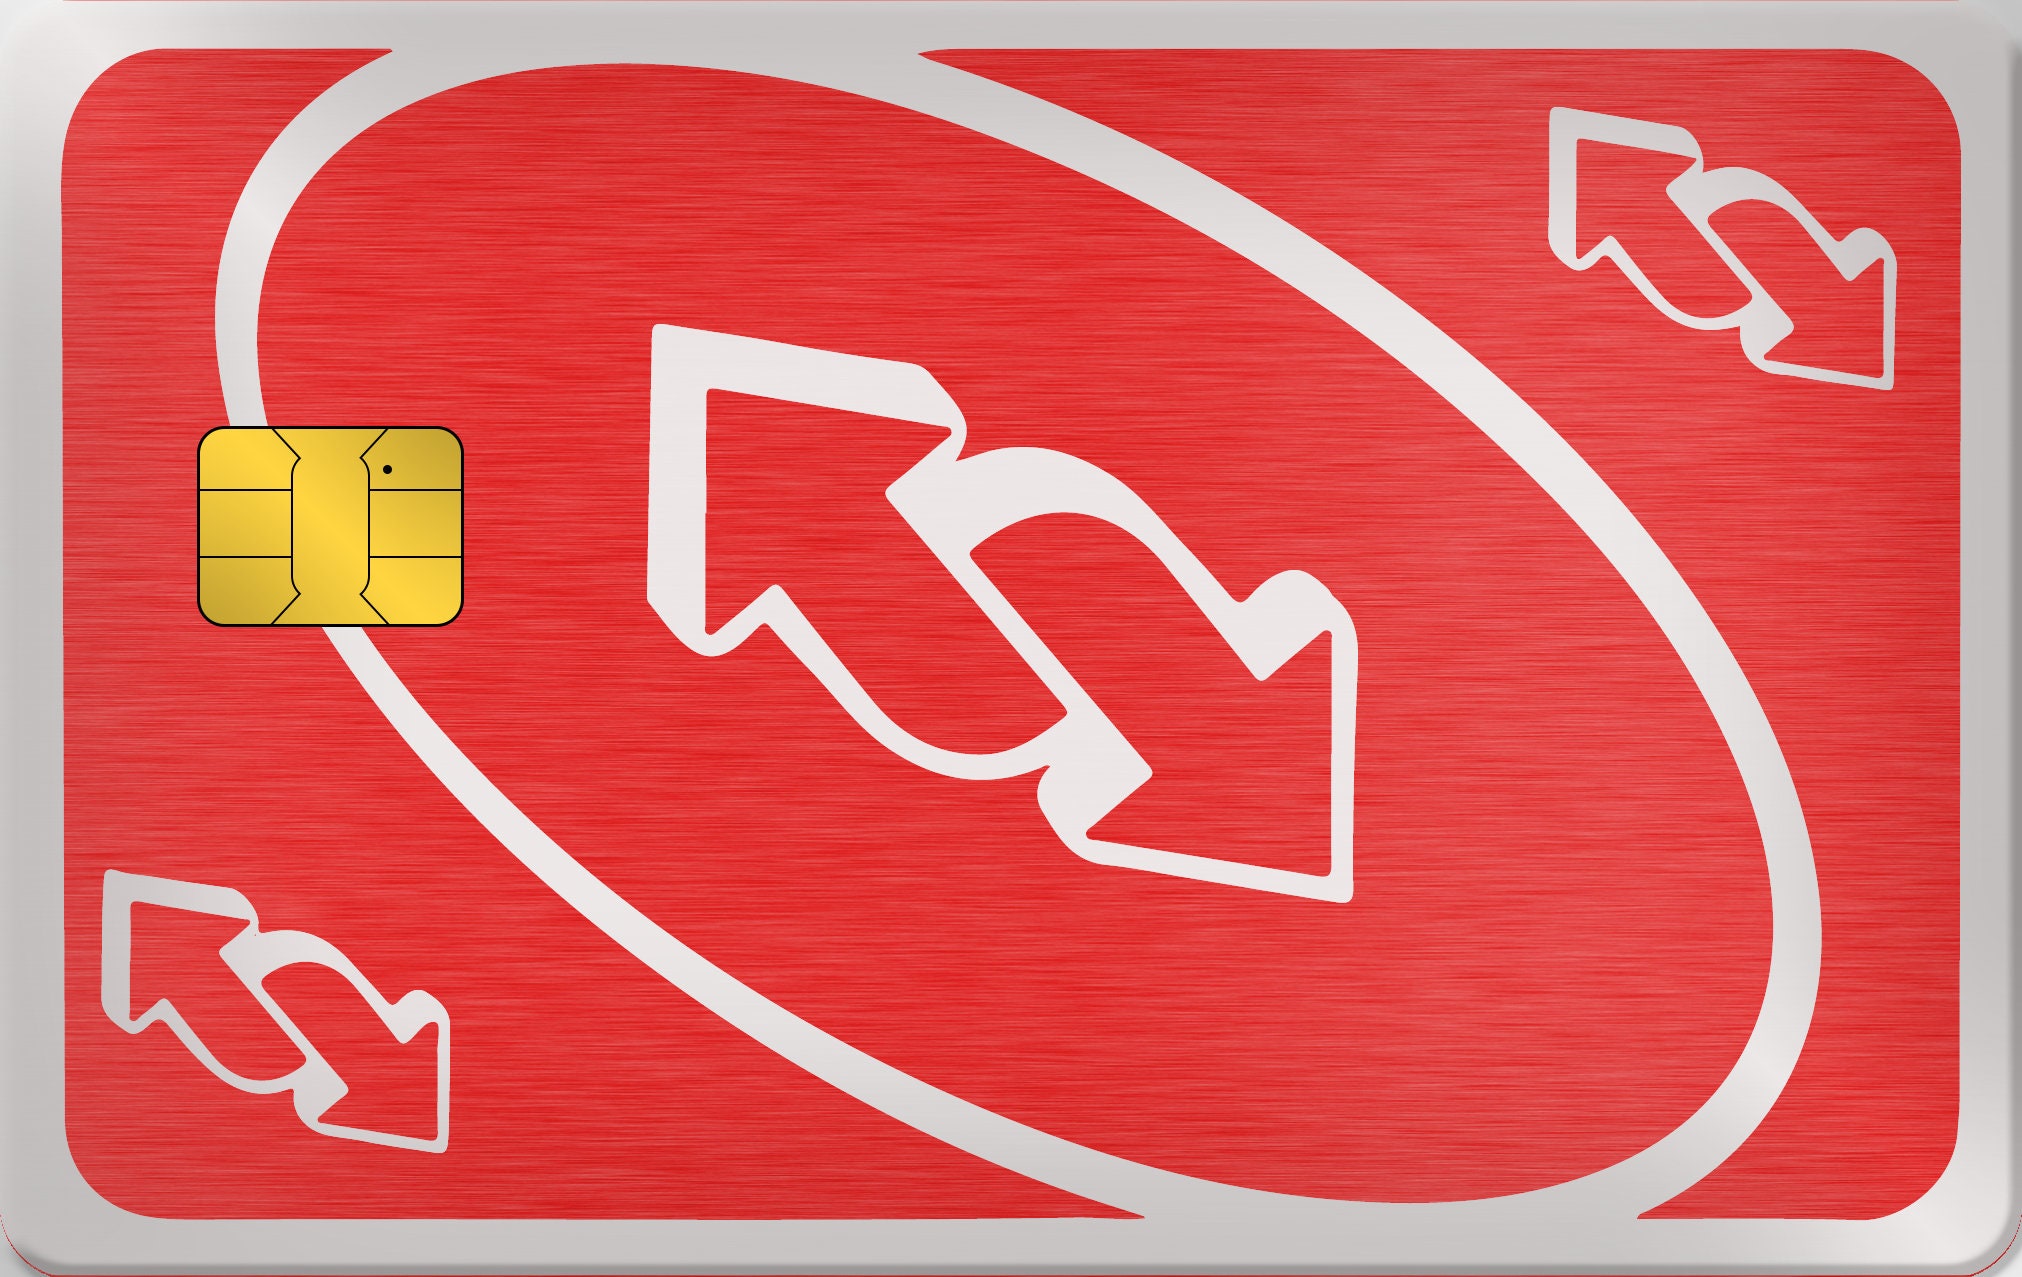  WORKIRAN Reverse Card Skin, Transportation, Key Card, Debit  Card, Credit Card Sticker, Covering & Personalizing Bank Card